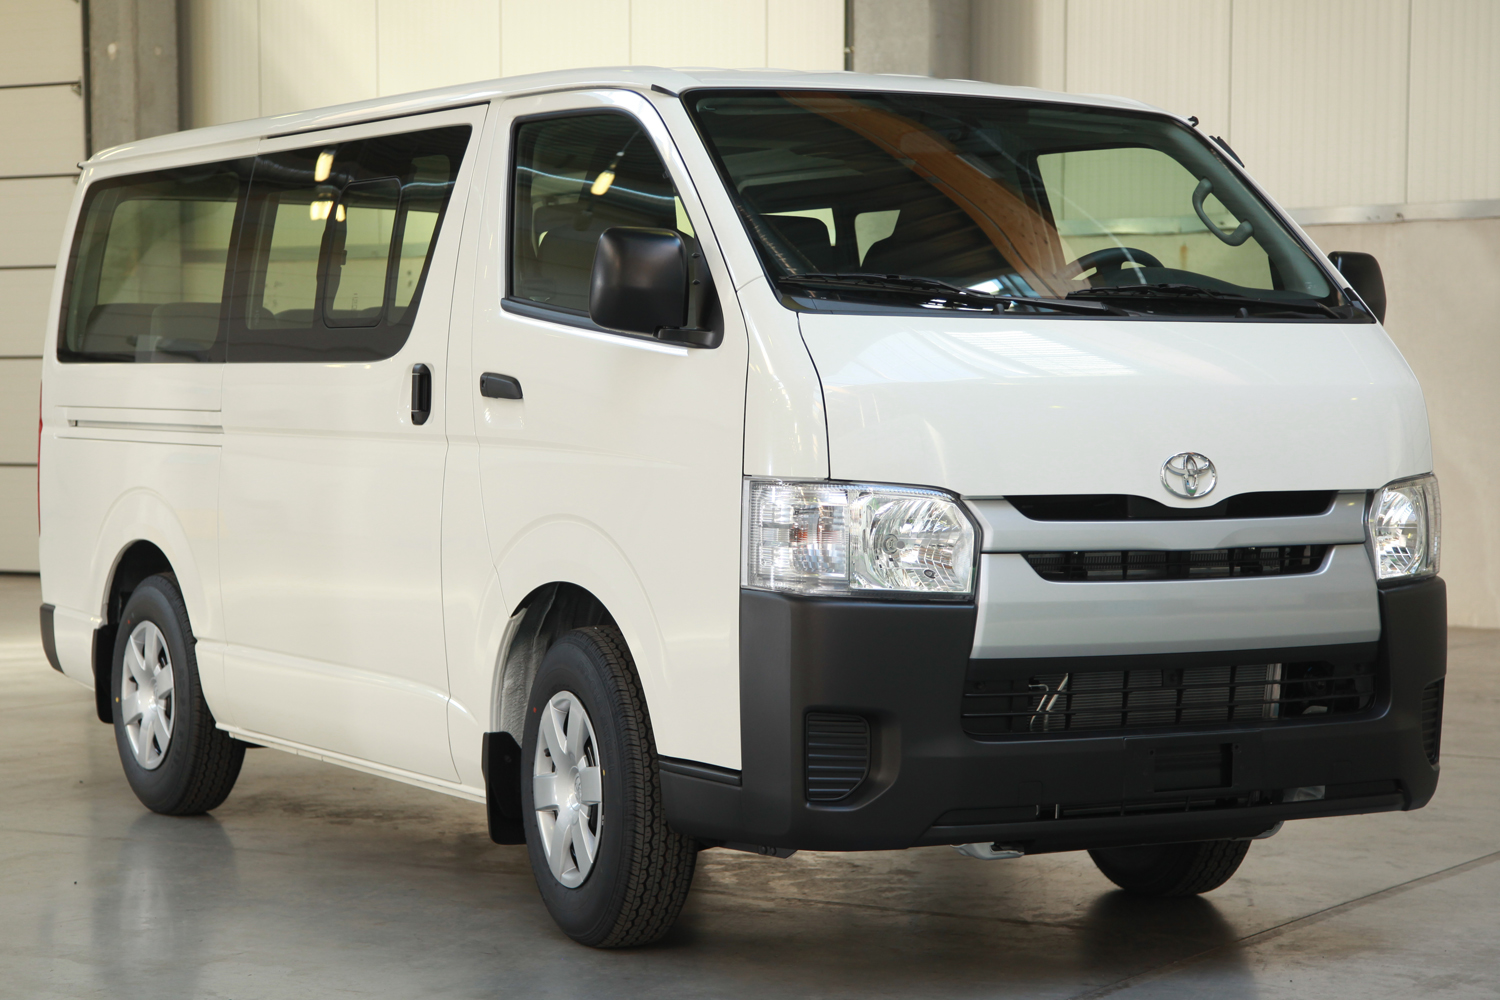 Keunggulan Menggunakan Toyota Hiace - Pengalaman Liburan Aman, Nyaman, dan Mewah Bersama Toyota Hiace